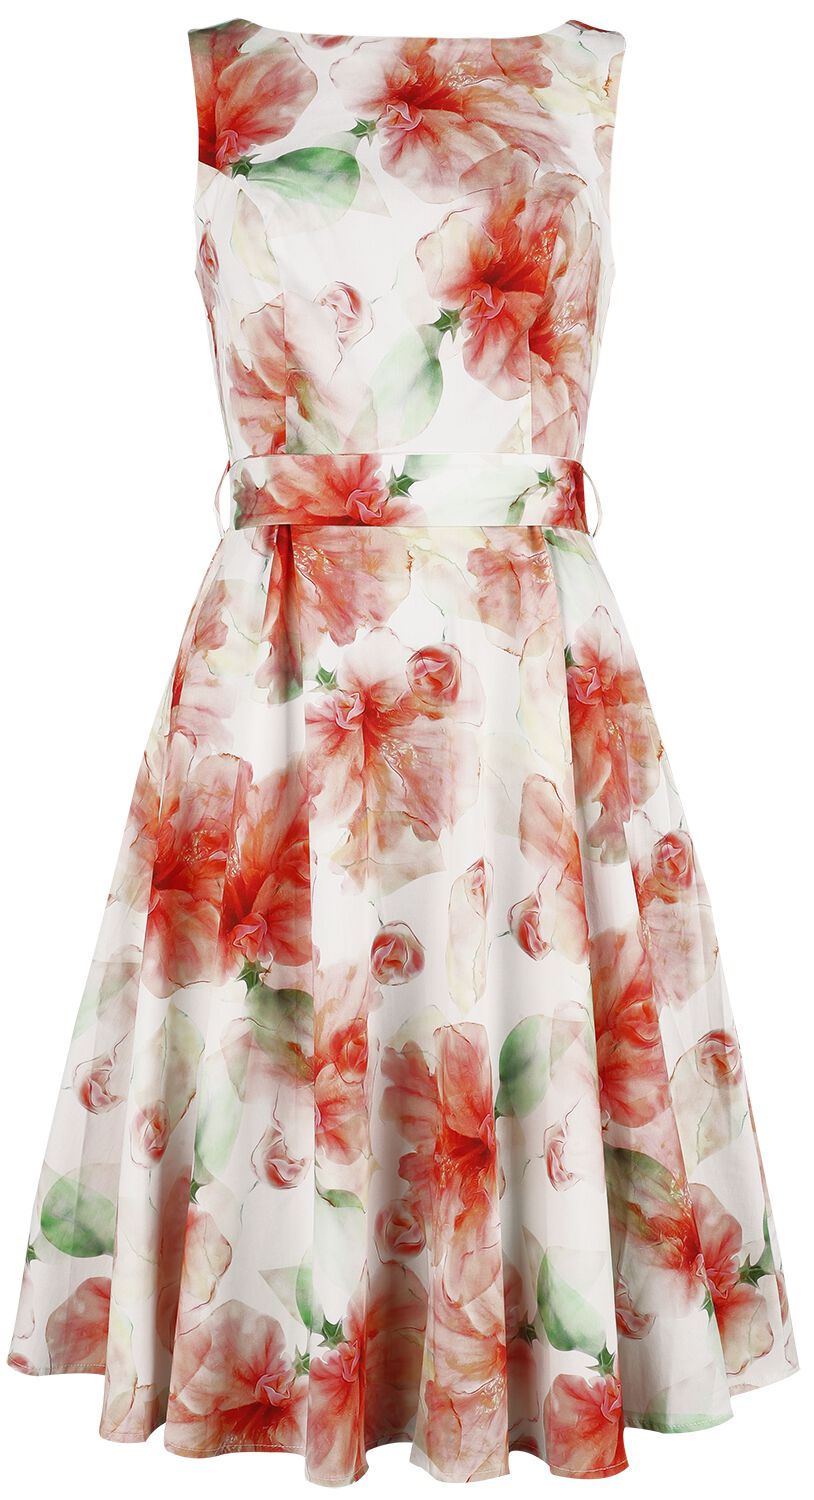 H&R London - Rockabilly Kleid knielang - Ayla Floral Swing Dress - XS bis 4XL - für Damen - Größe 4XL - multicolor